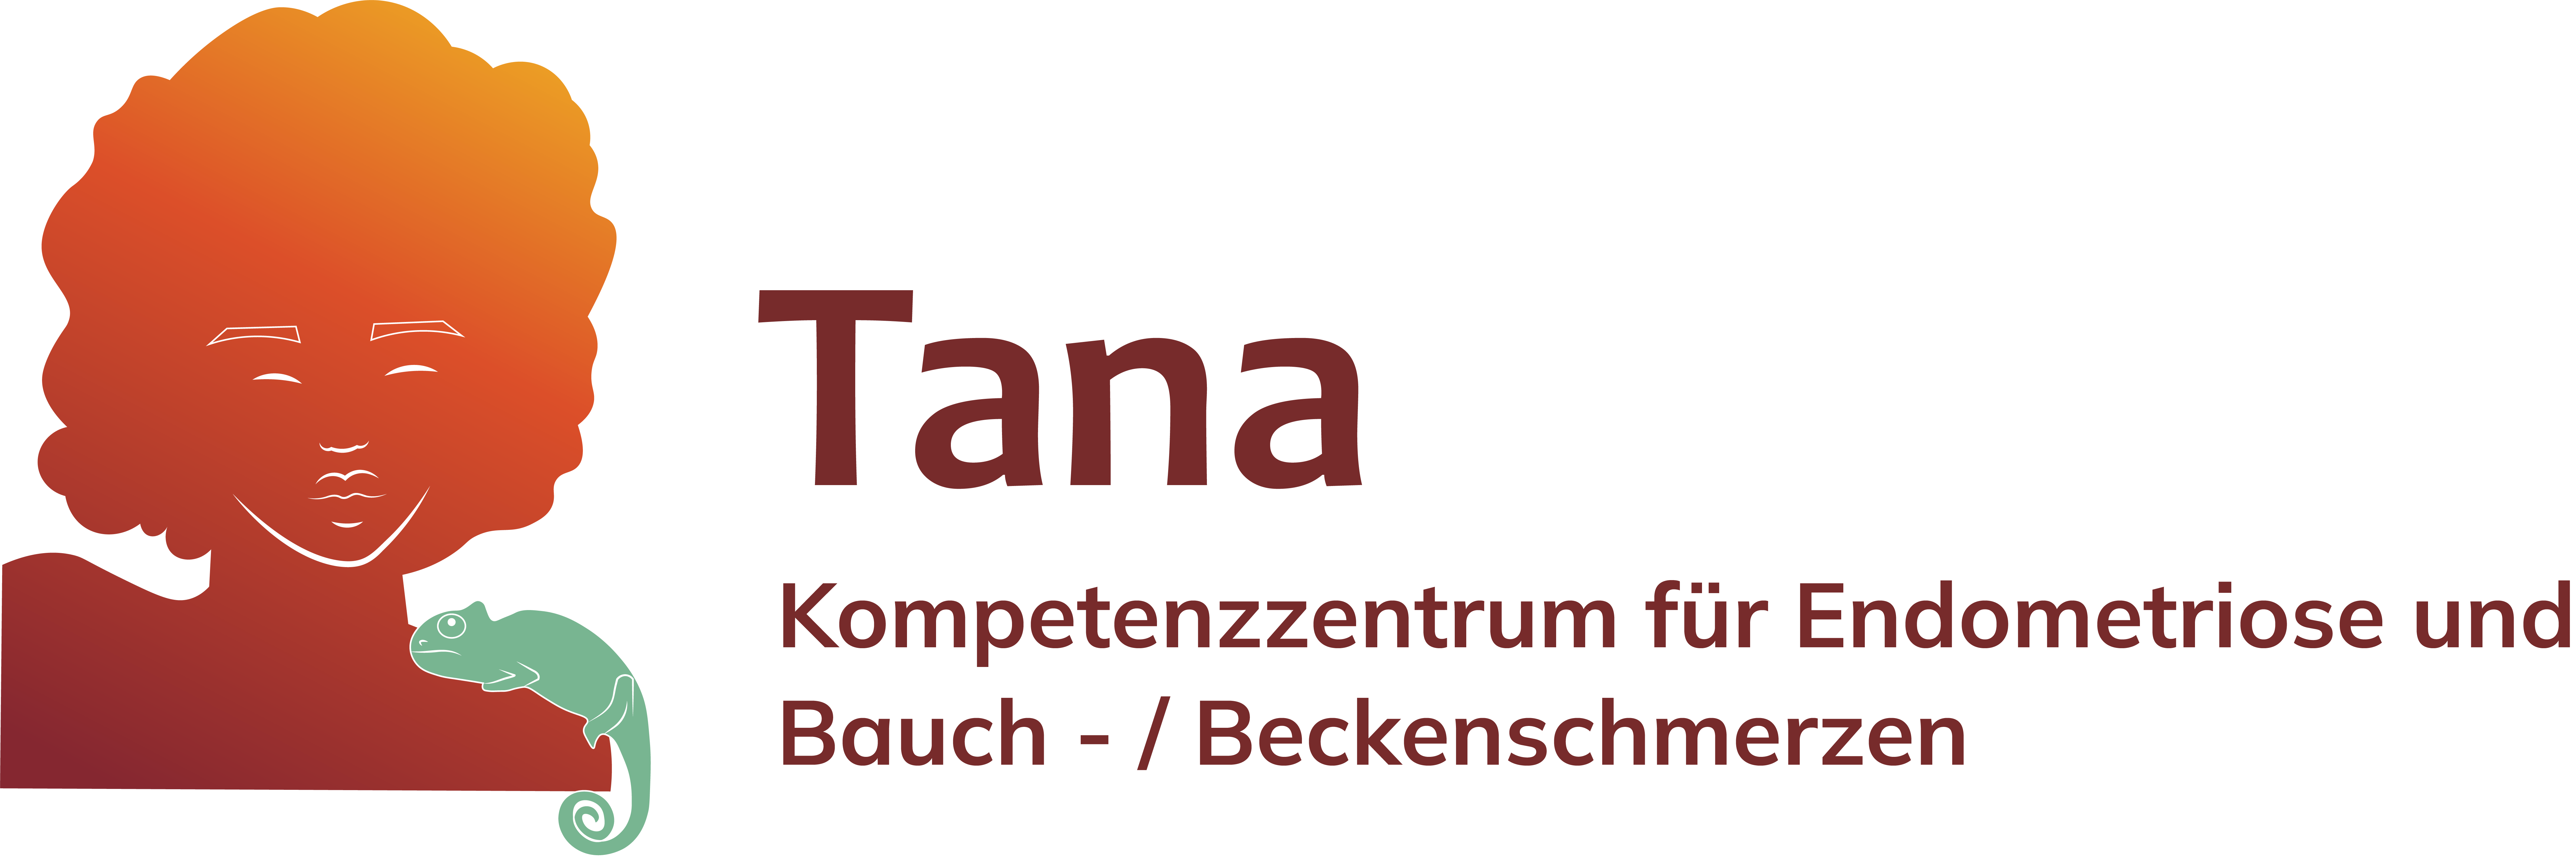 20220601 Tanazentrum Logo Final Nur Tana (1)